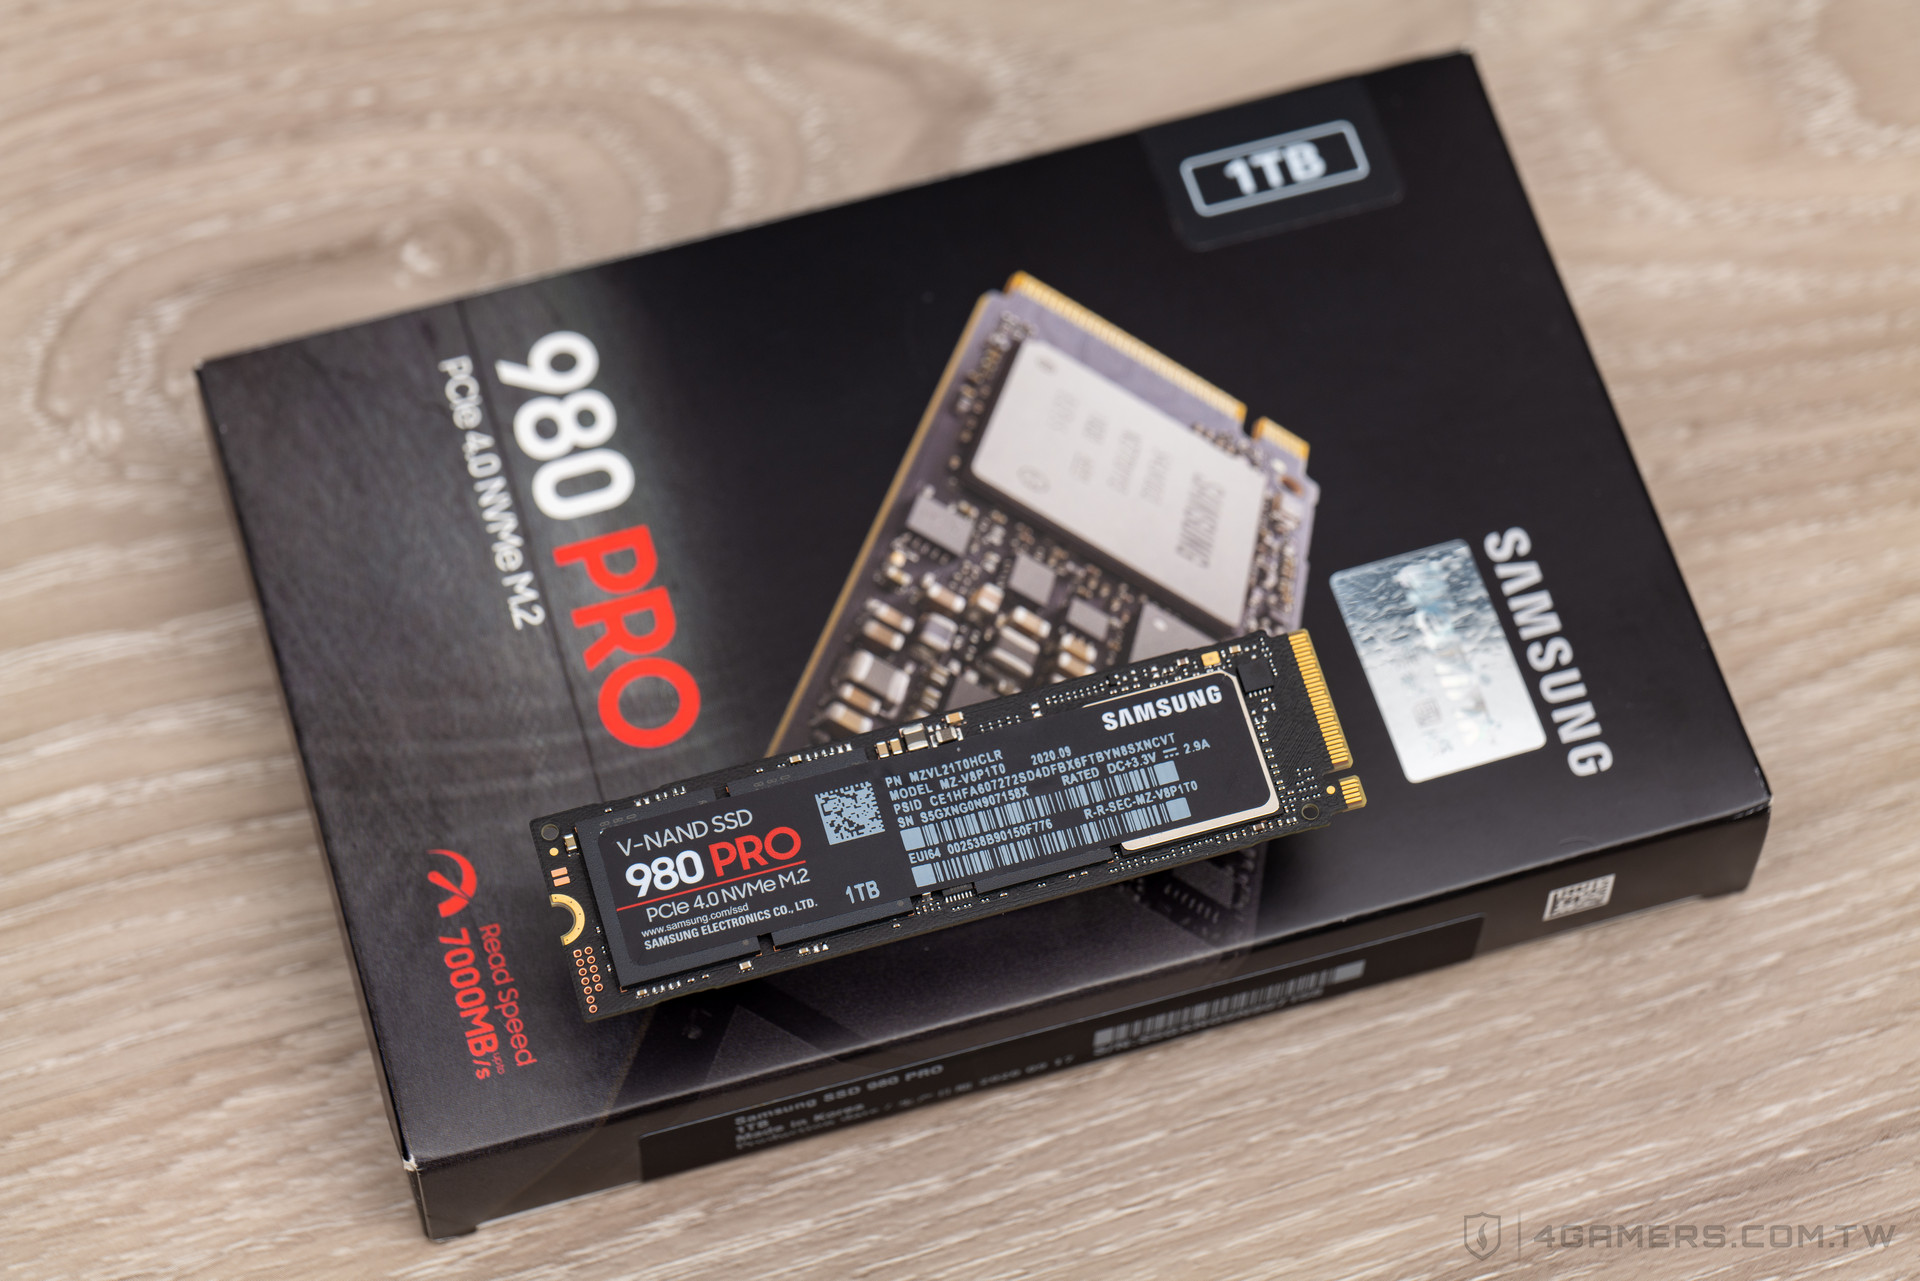 Samsung 三星 980 PRO PCIe 4.0 NVMe M.2 SSD 1TB